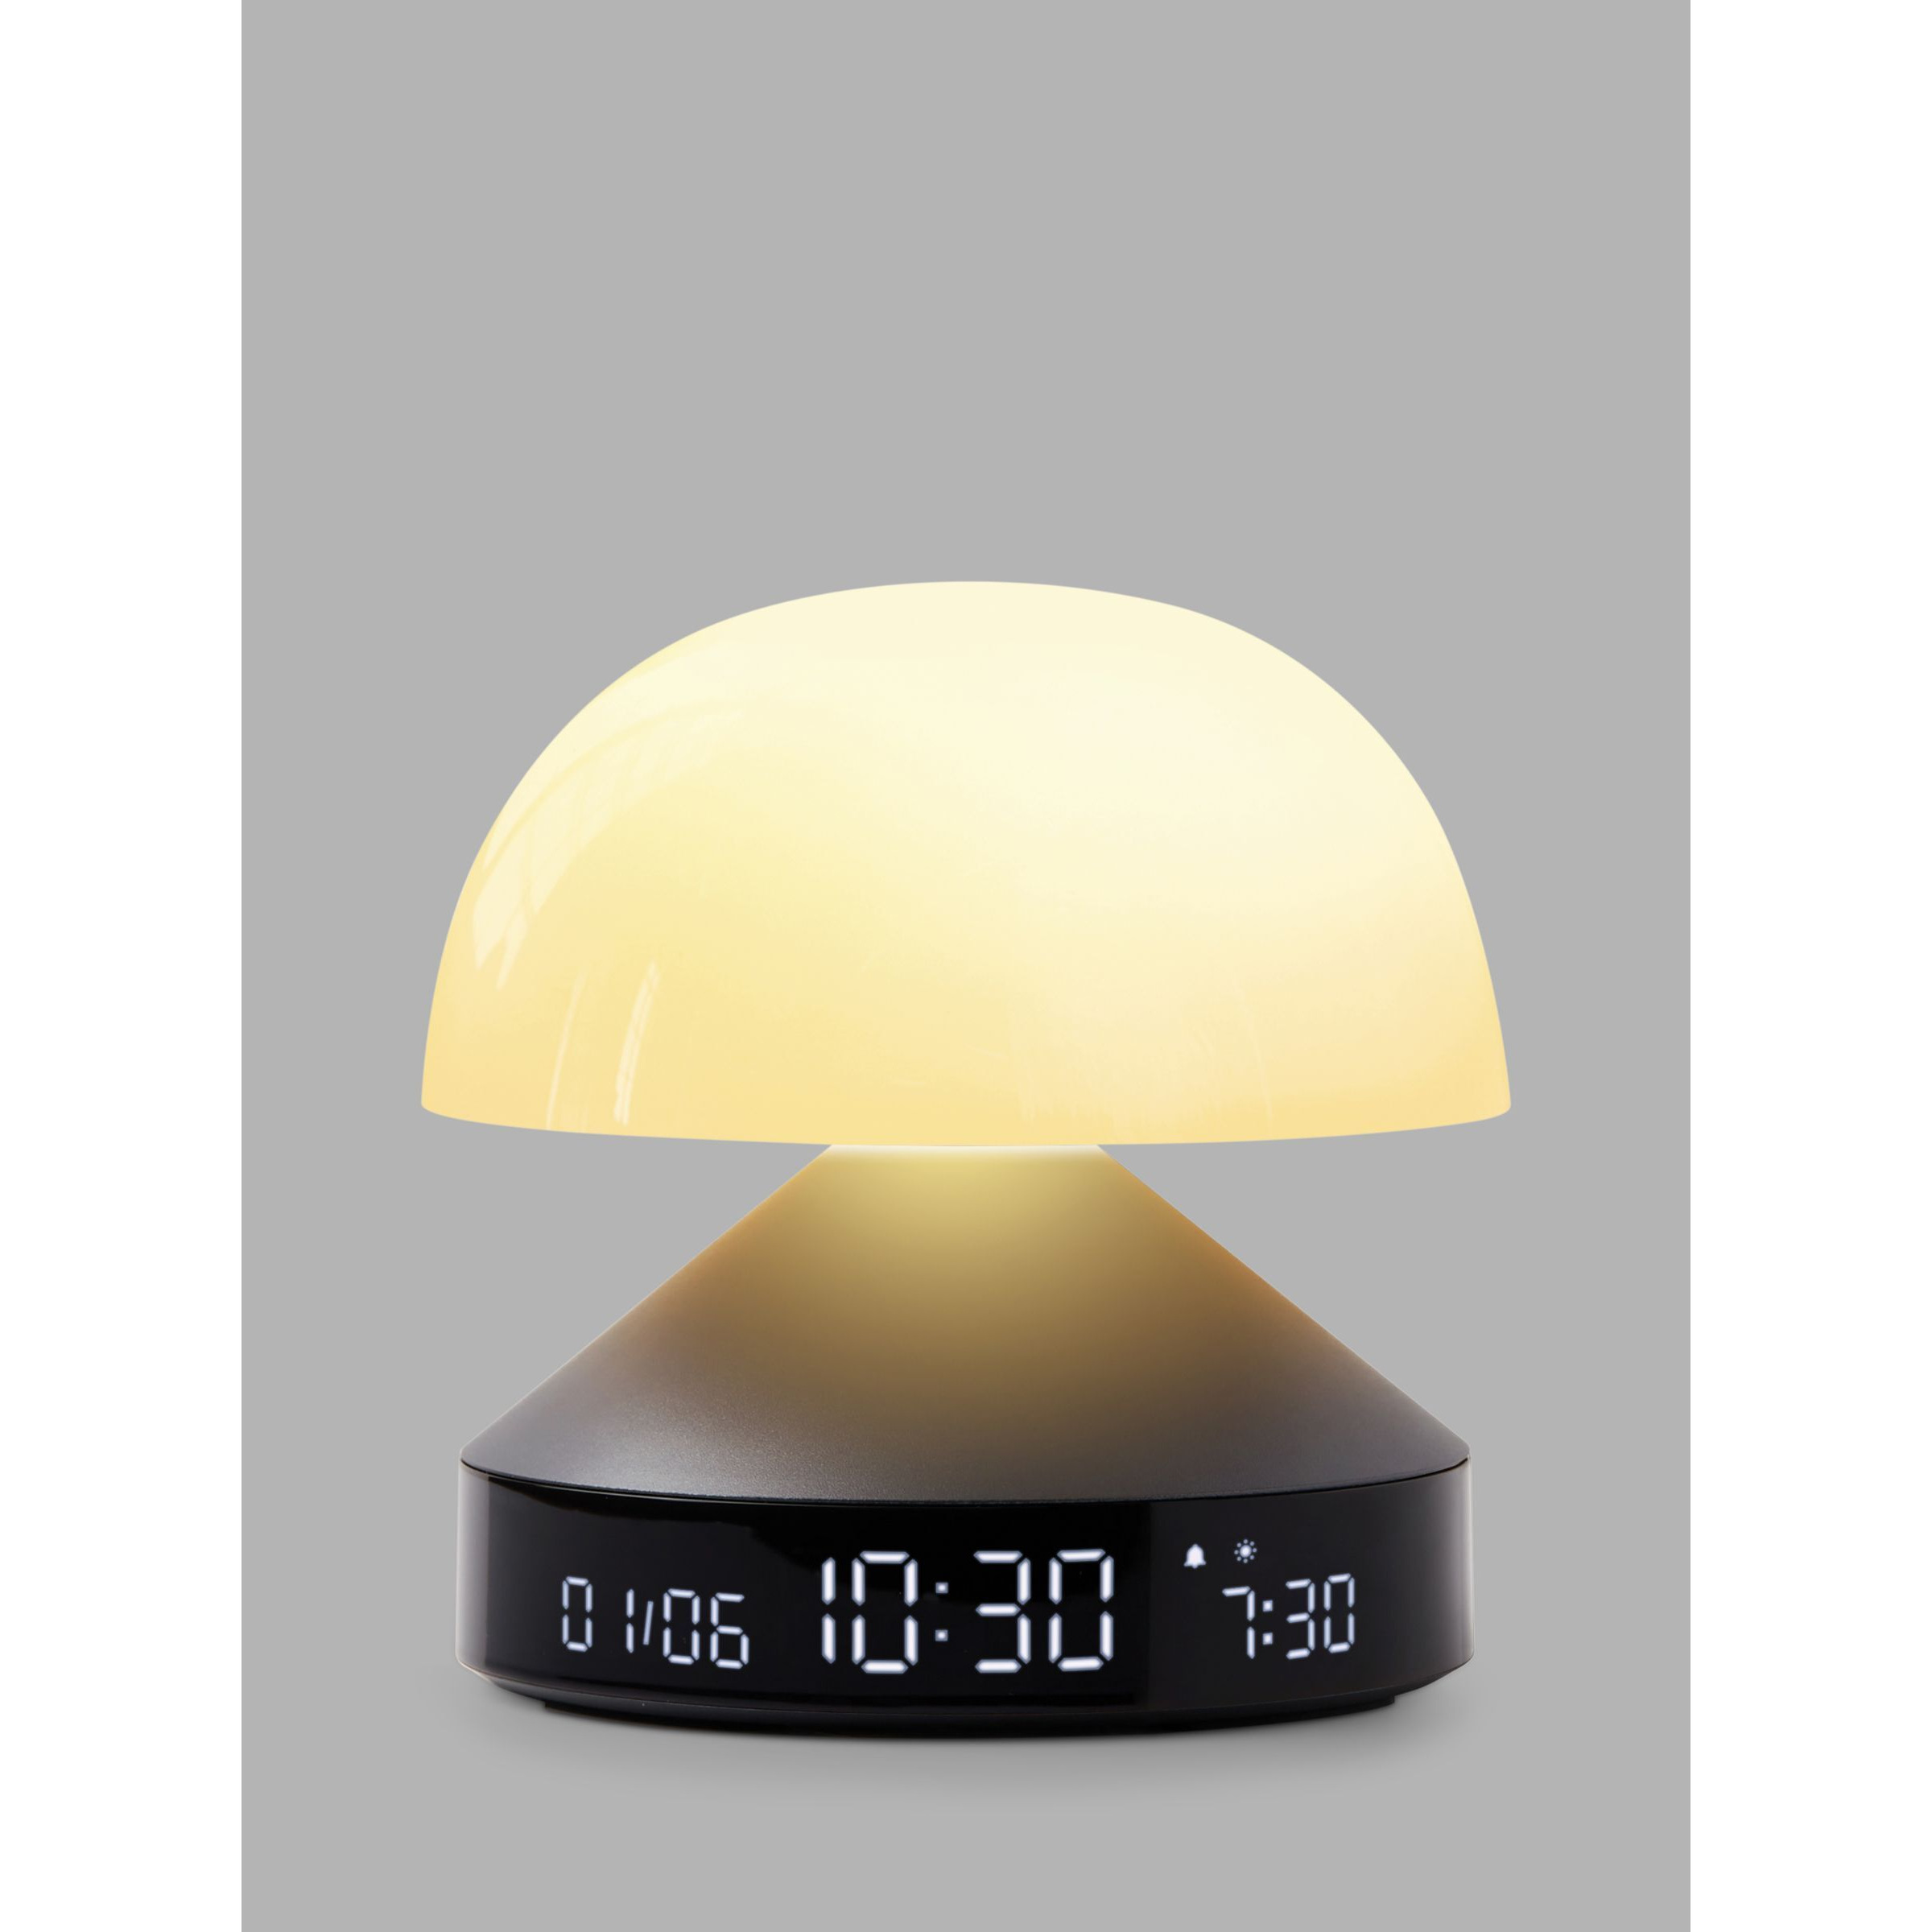 Lexon Mina Sunrise Lamp Alarm Clock - image 1